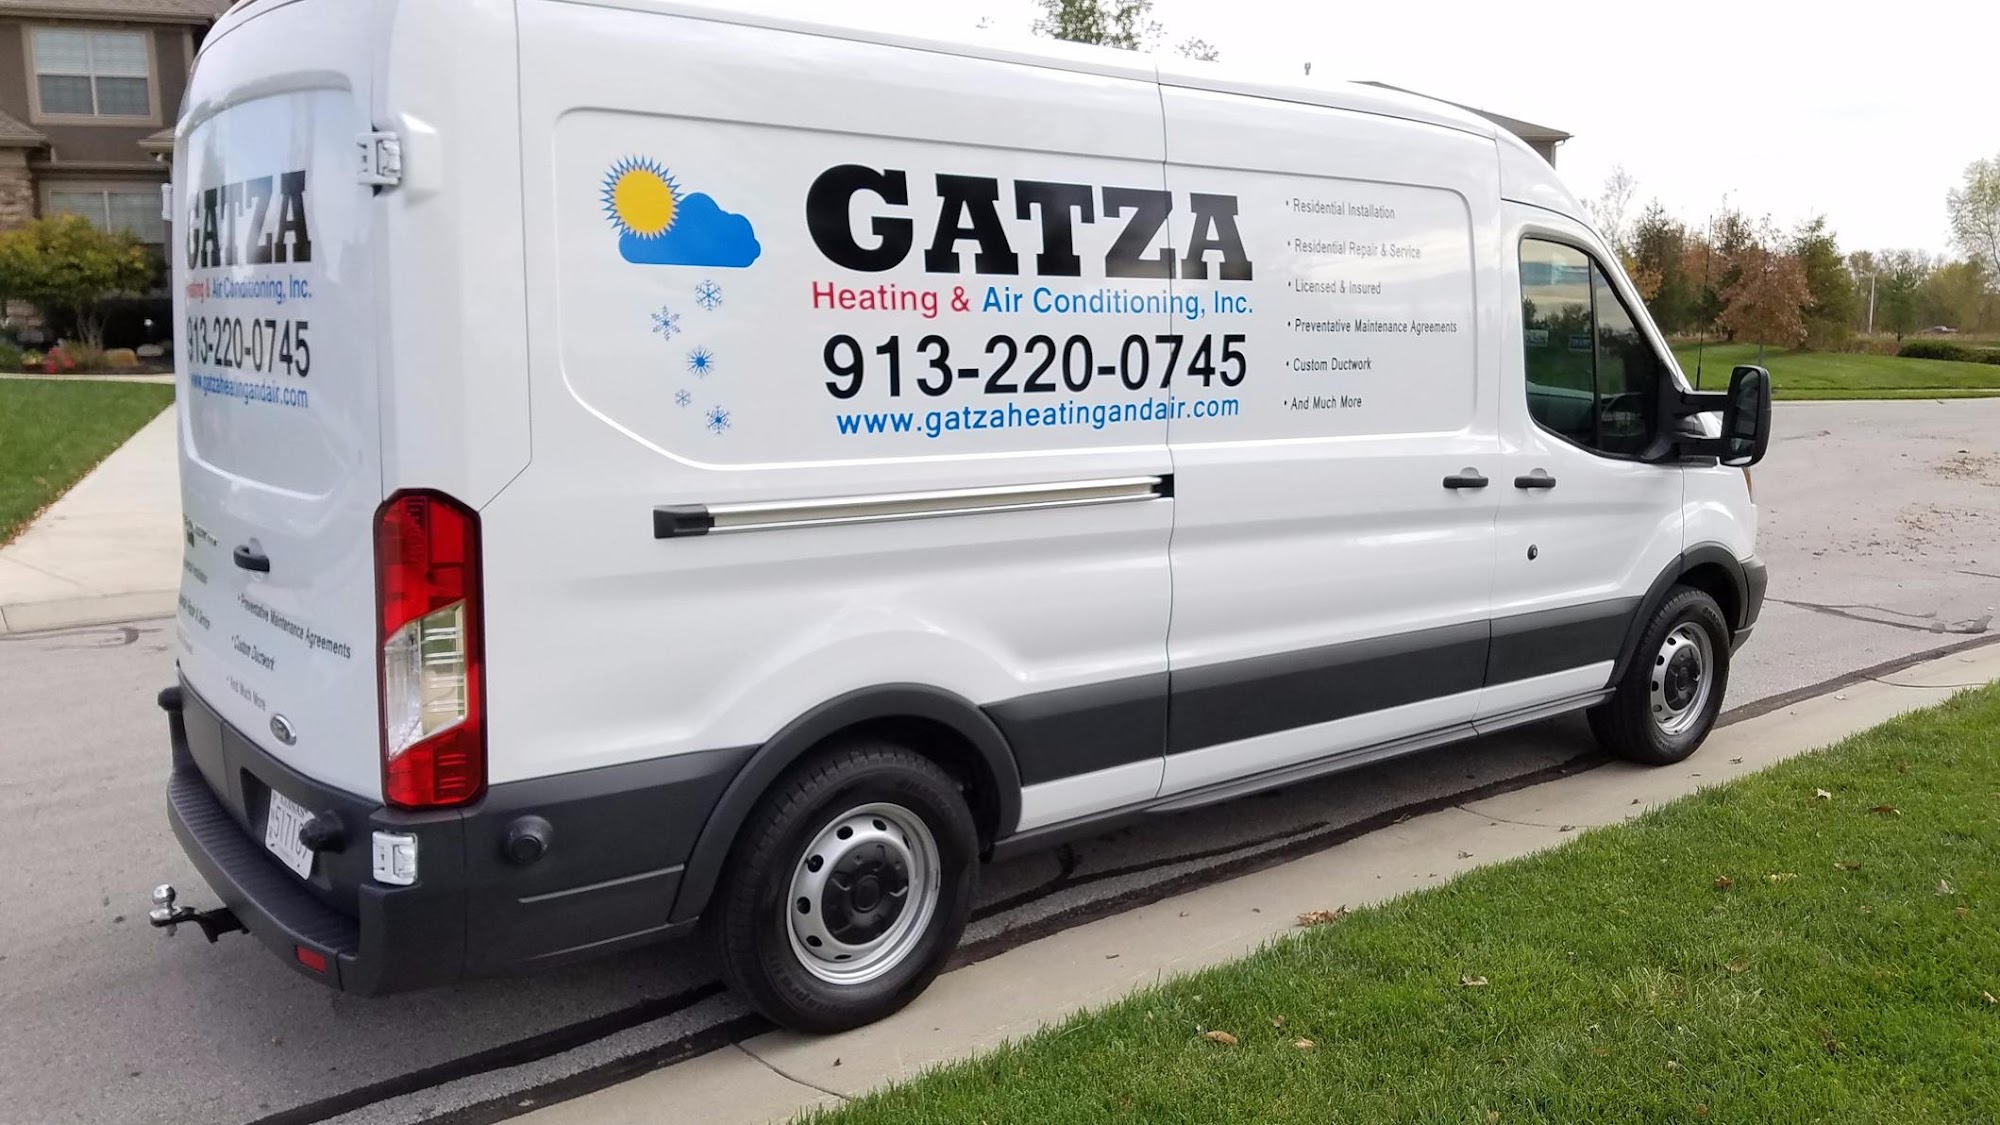 Gatza Heating & Air Conditioning, Inc